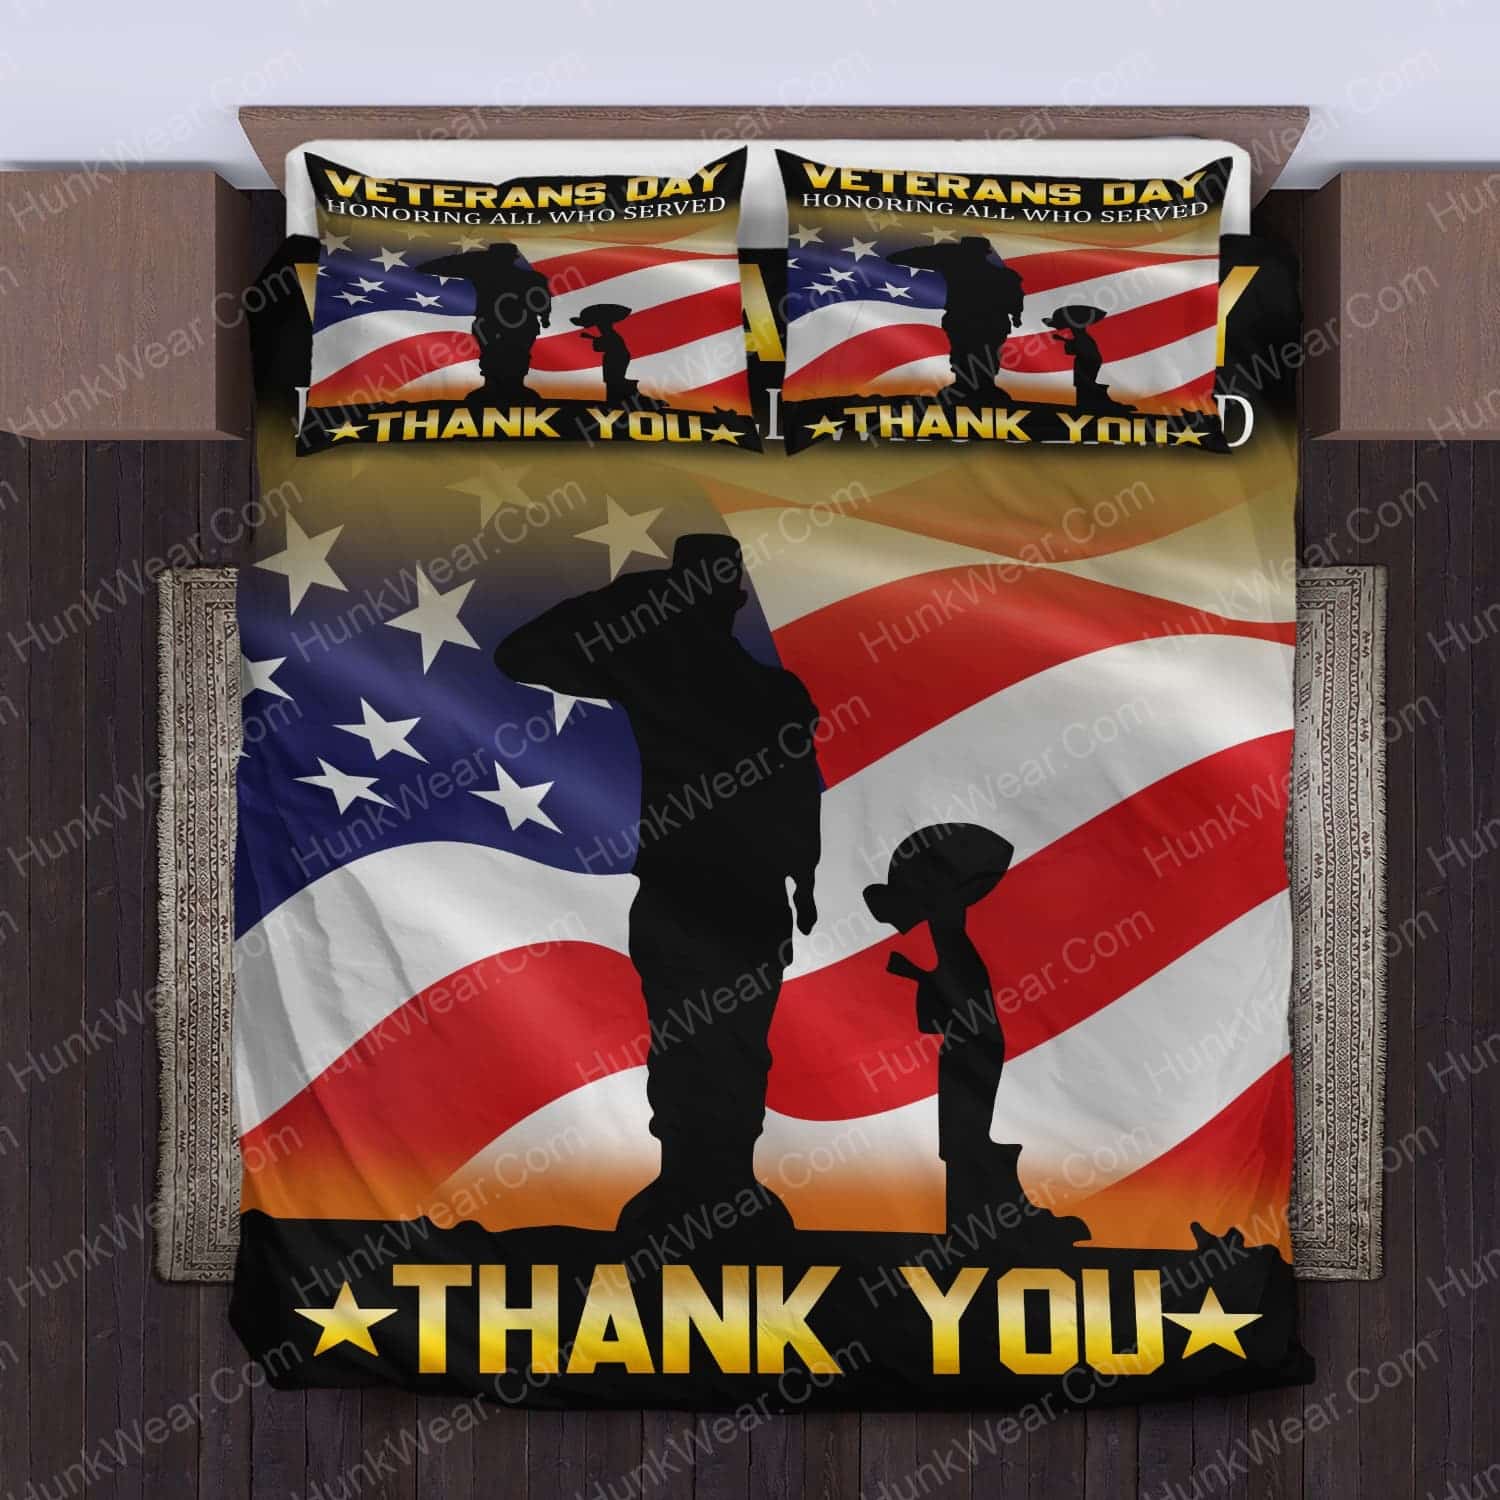 Veterans Day Honoring All Who Served Bedding Set HunkWear.Com